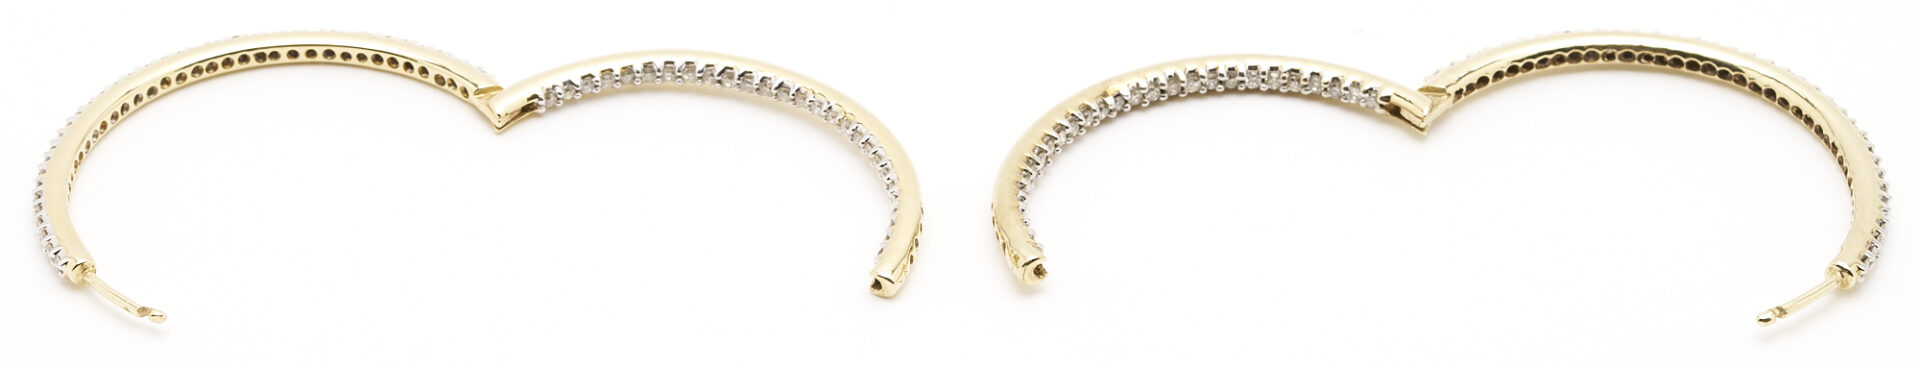 Lot 688: David Yurman Onyx & Sterling Pendant and Pr. 10K Gold & Diamond Earrings